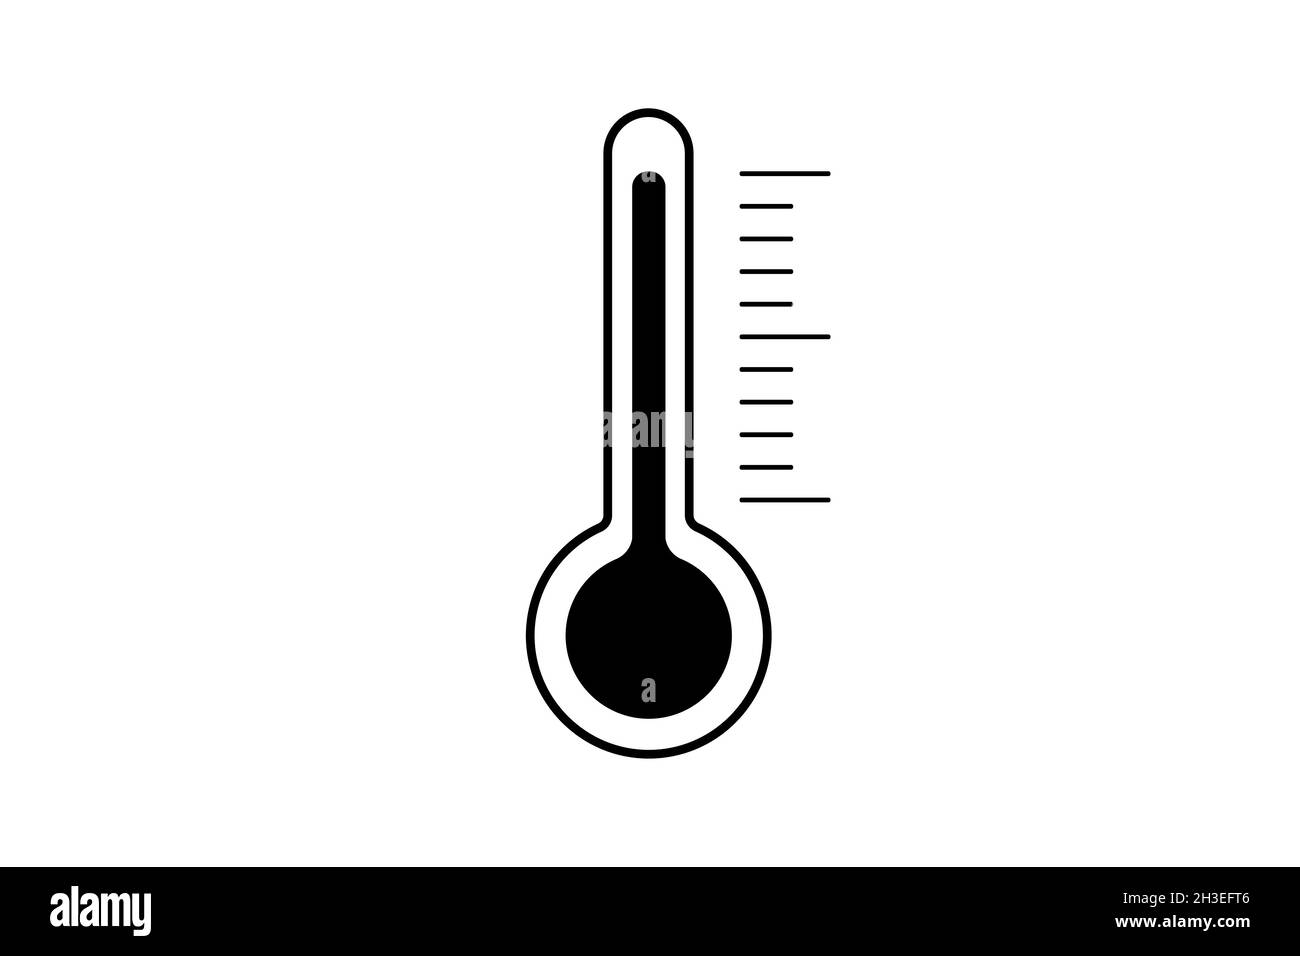 Thermometer icon symbol simple design Stock Vector